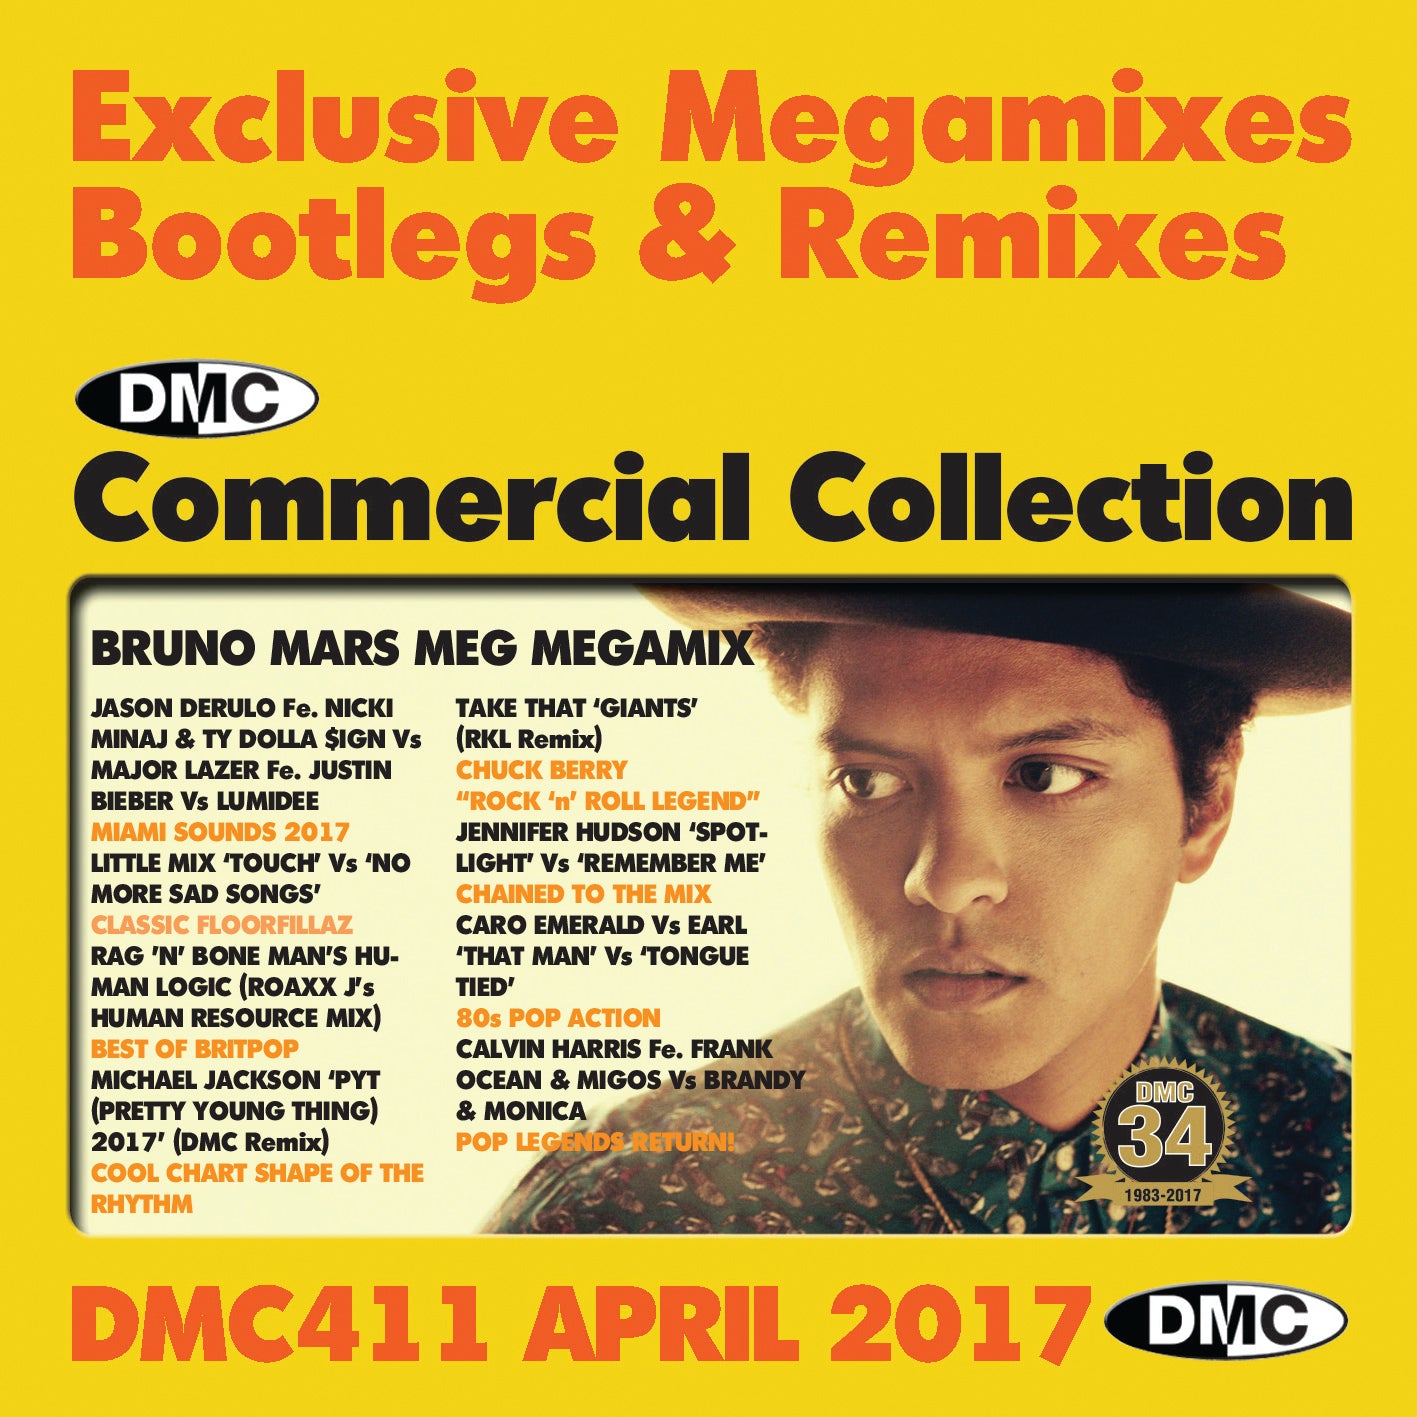 DMC COMMERCIAL COLLECTION 411 - April 2017 Release -  Exclusive... Megamixes Remixes Two Trackers